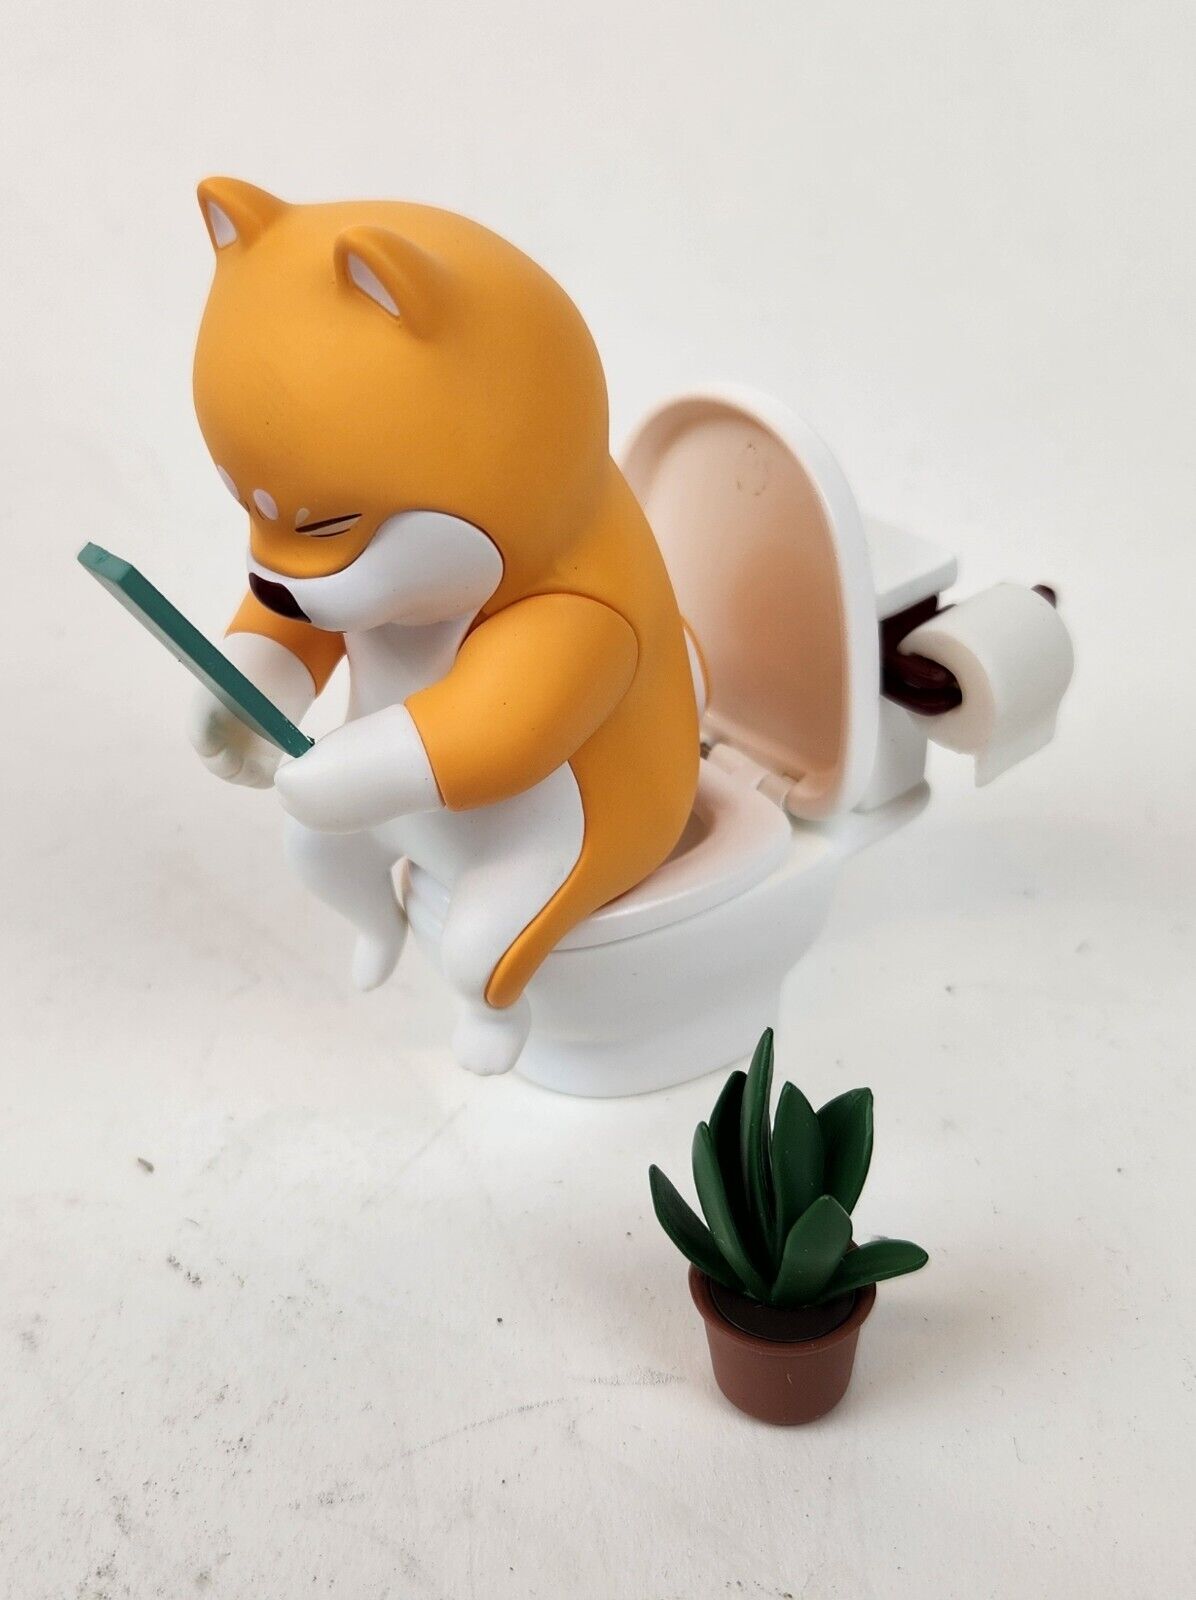 Guraya HomeShiba Shiba Inu Dog Sitting on Toilet Funny Cute Figure Figurine